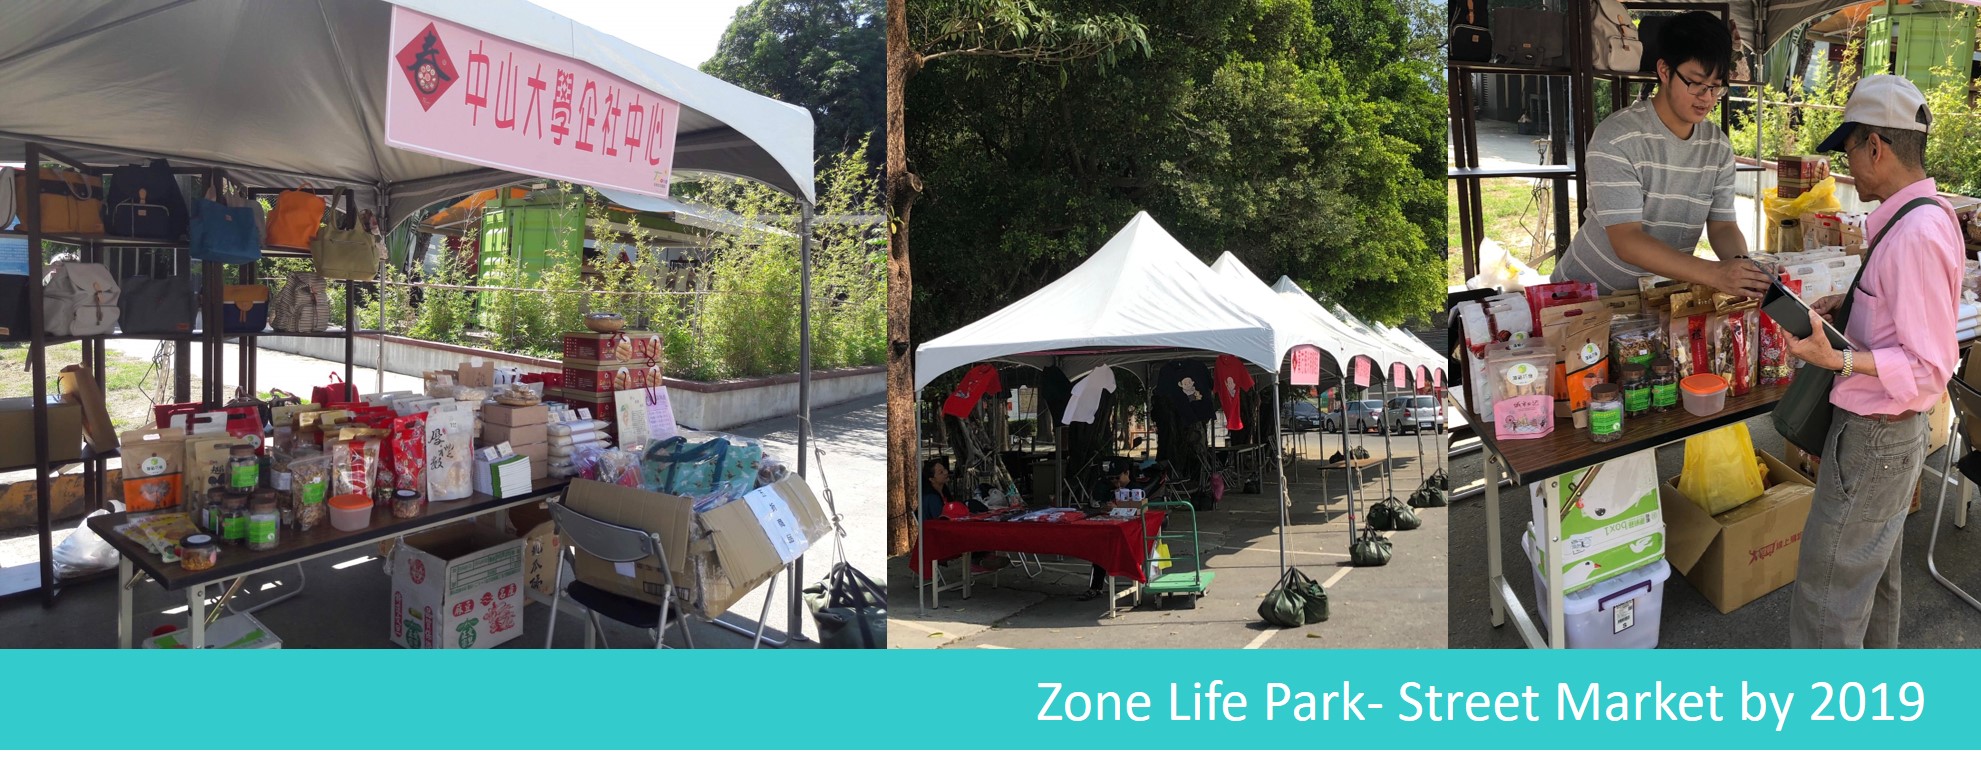 Zone Life Park- Street Market by 2019